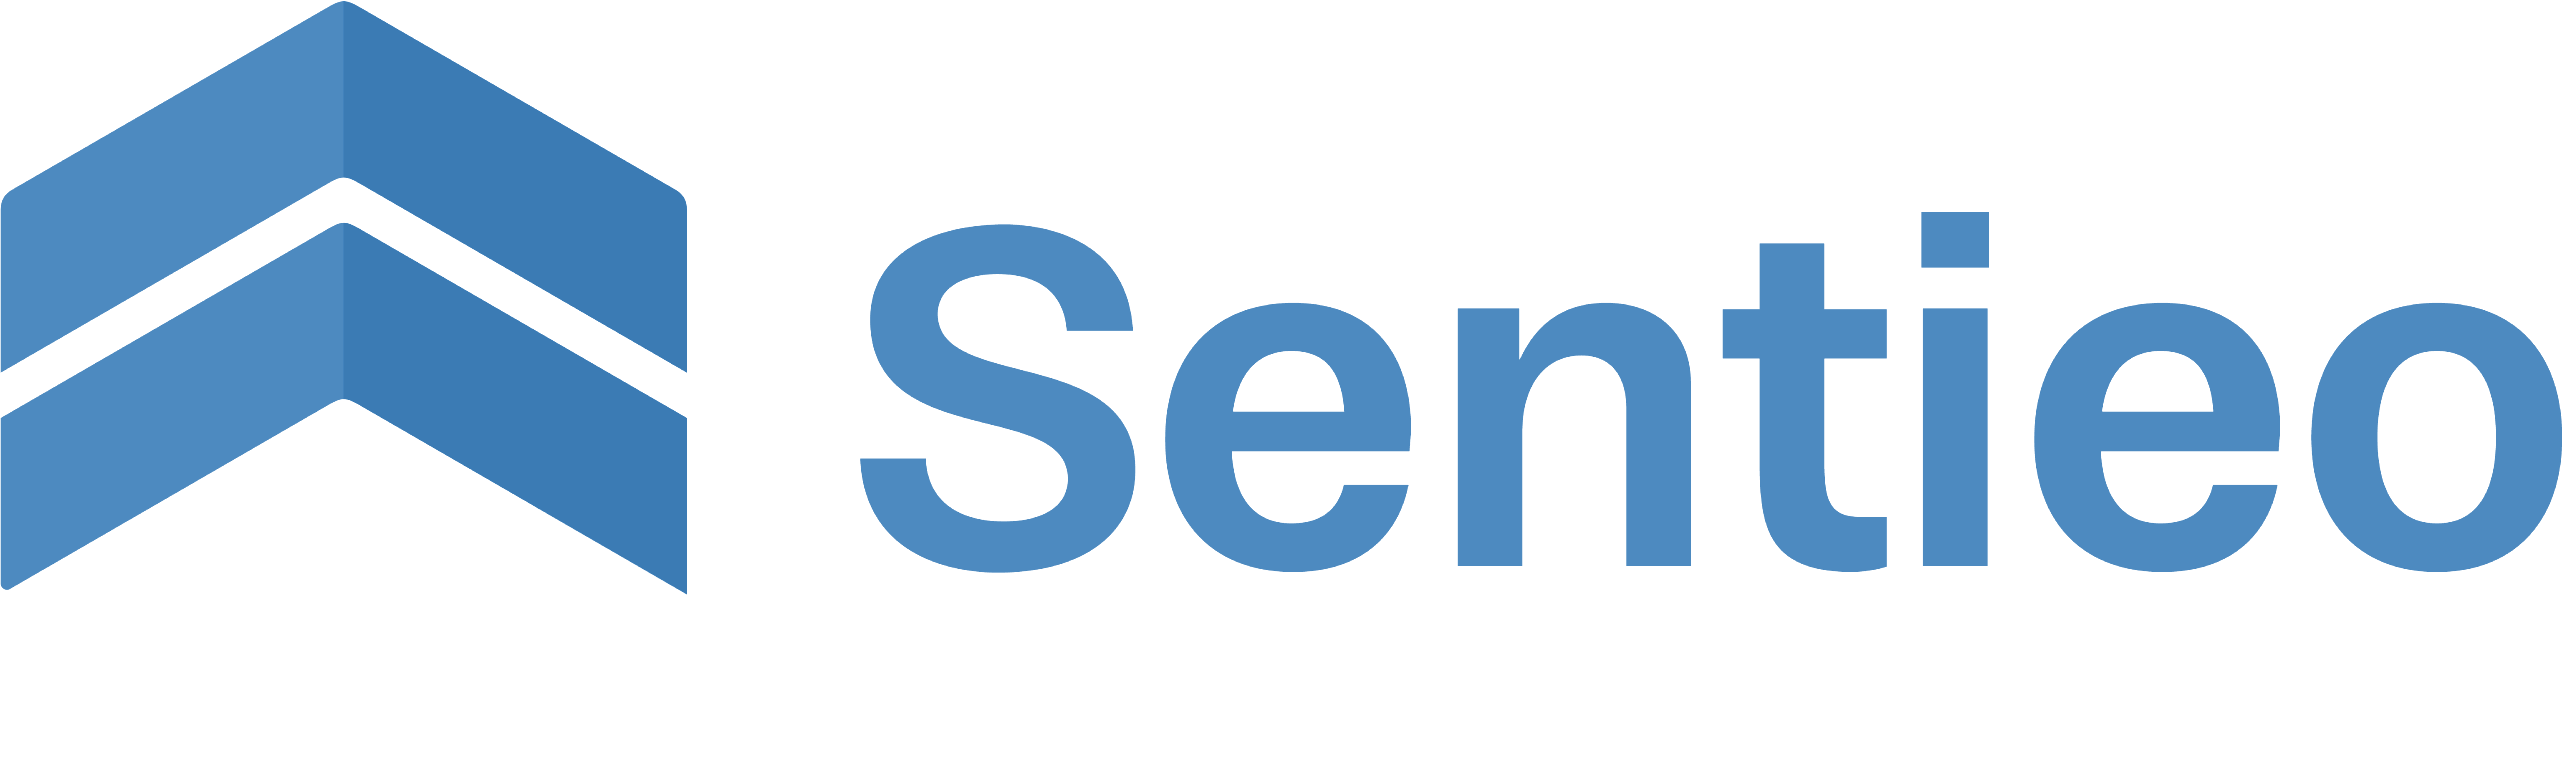 Sentieo Raises $20M Series B Round Following Record Demand for AI-Driven Financial Research Platform